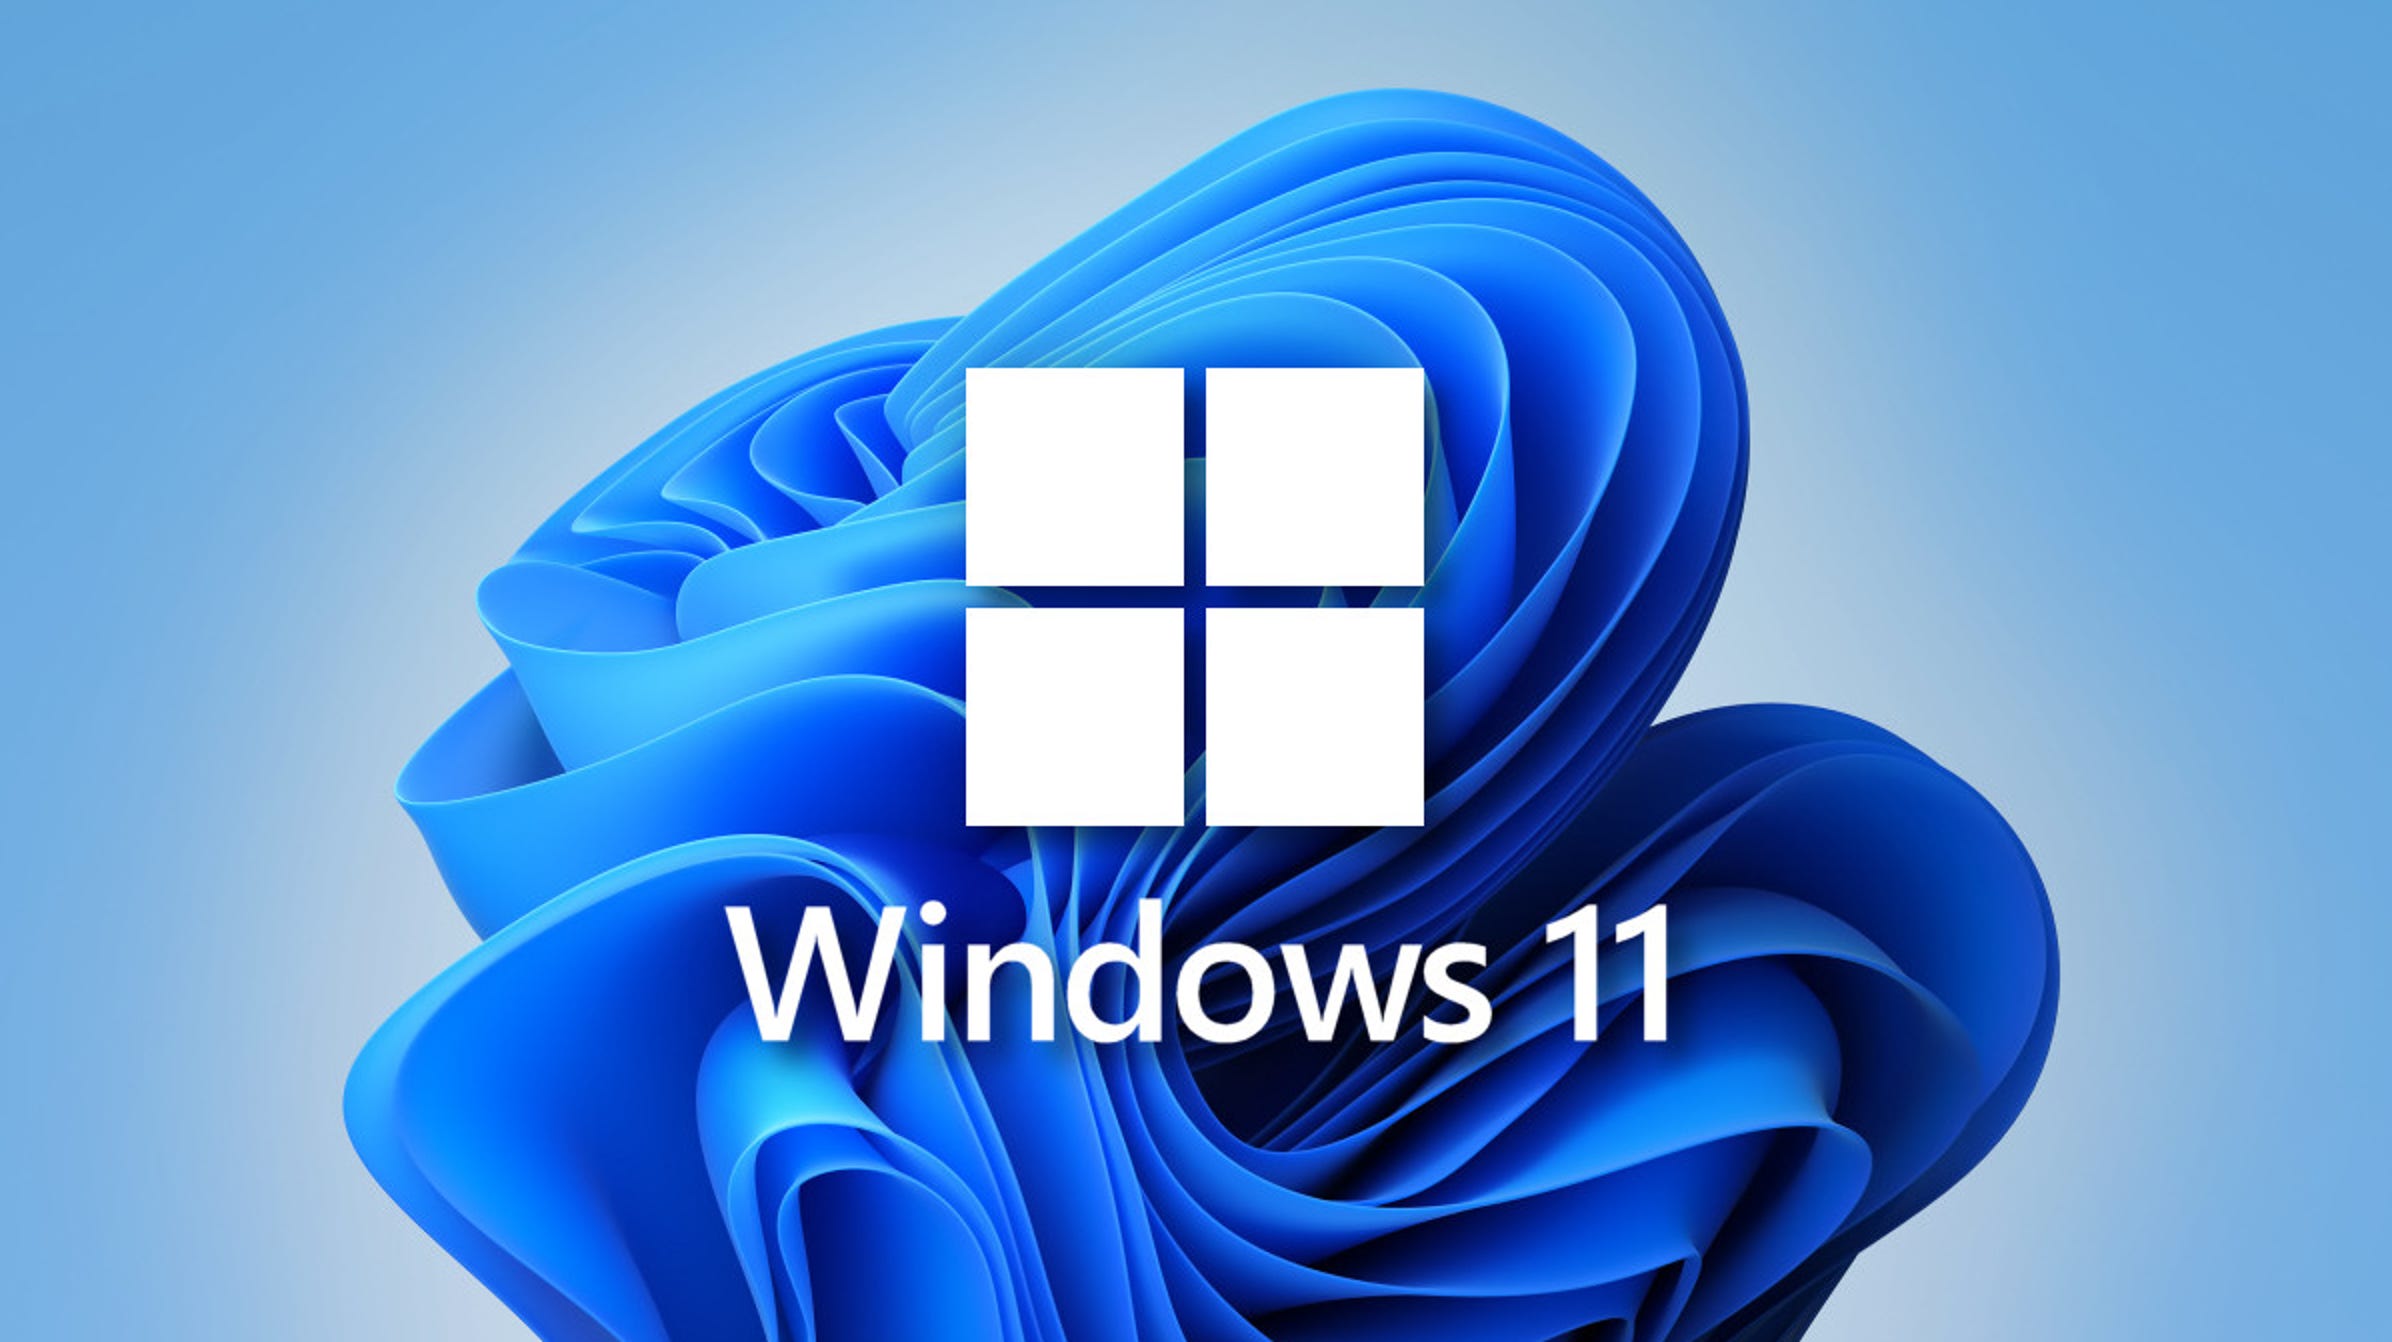 Microsoft starts testing new volume mixer in Windows 11